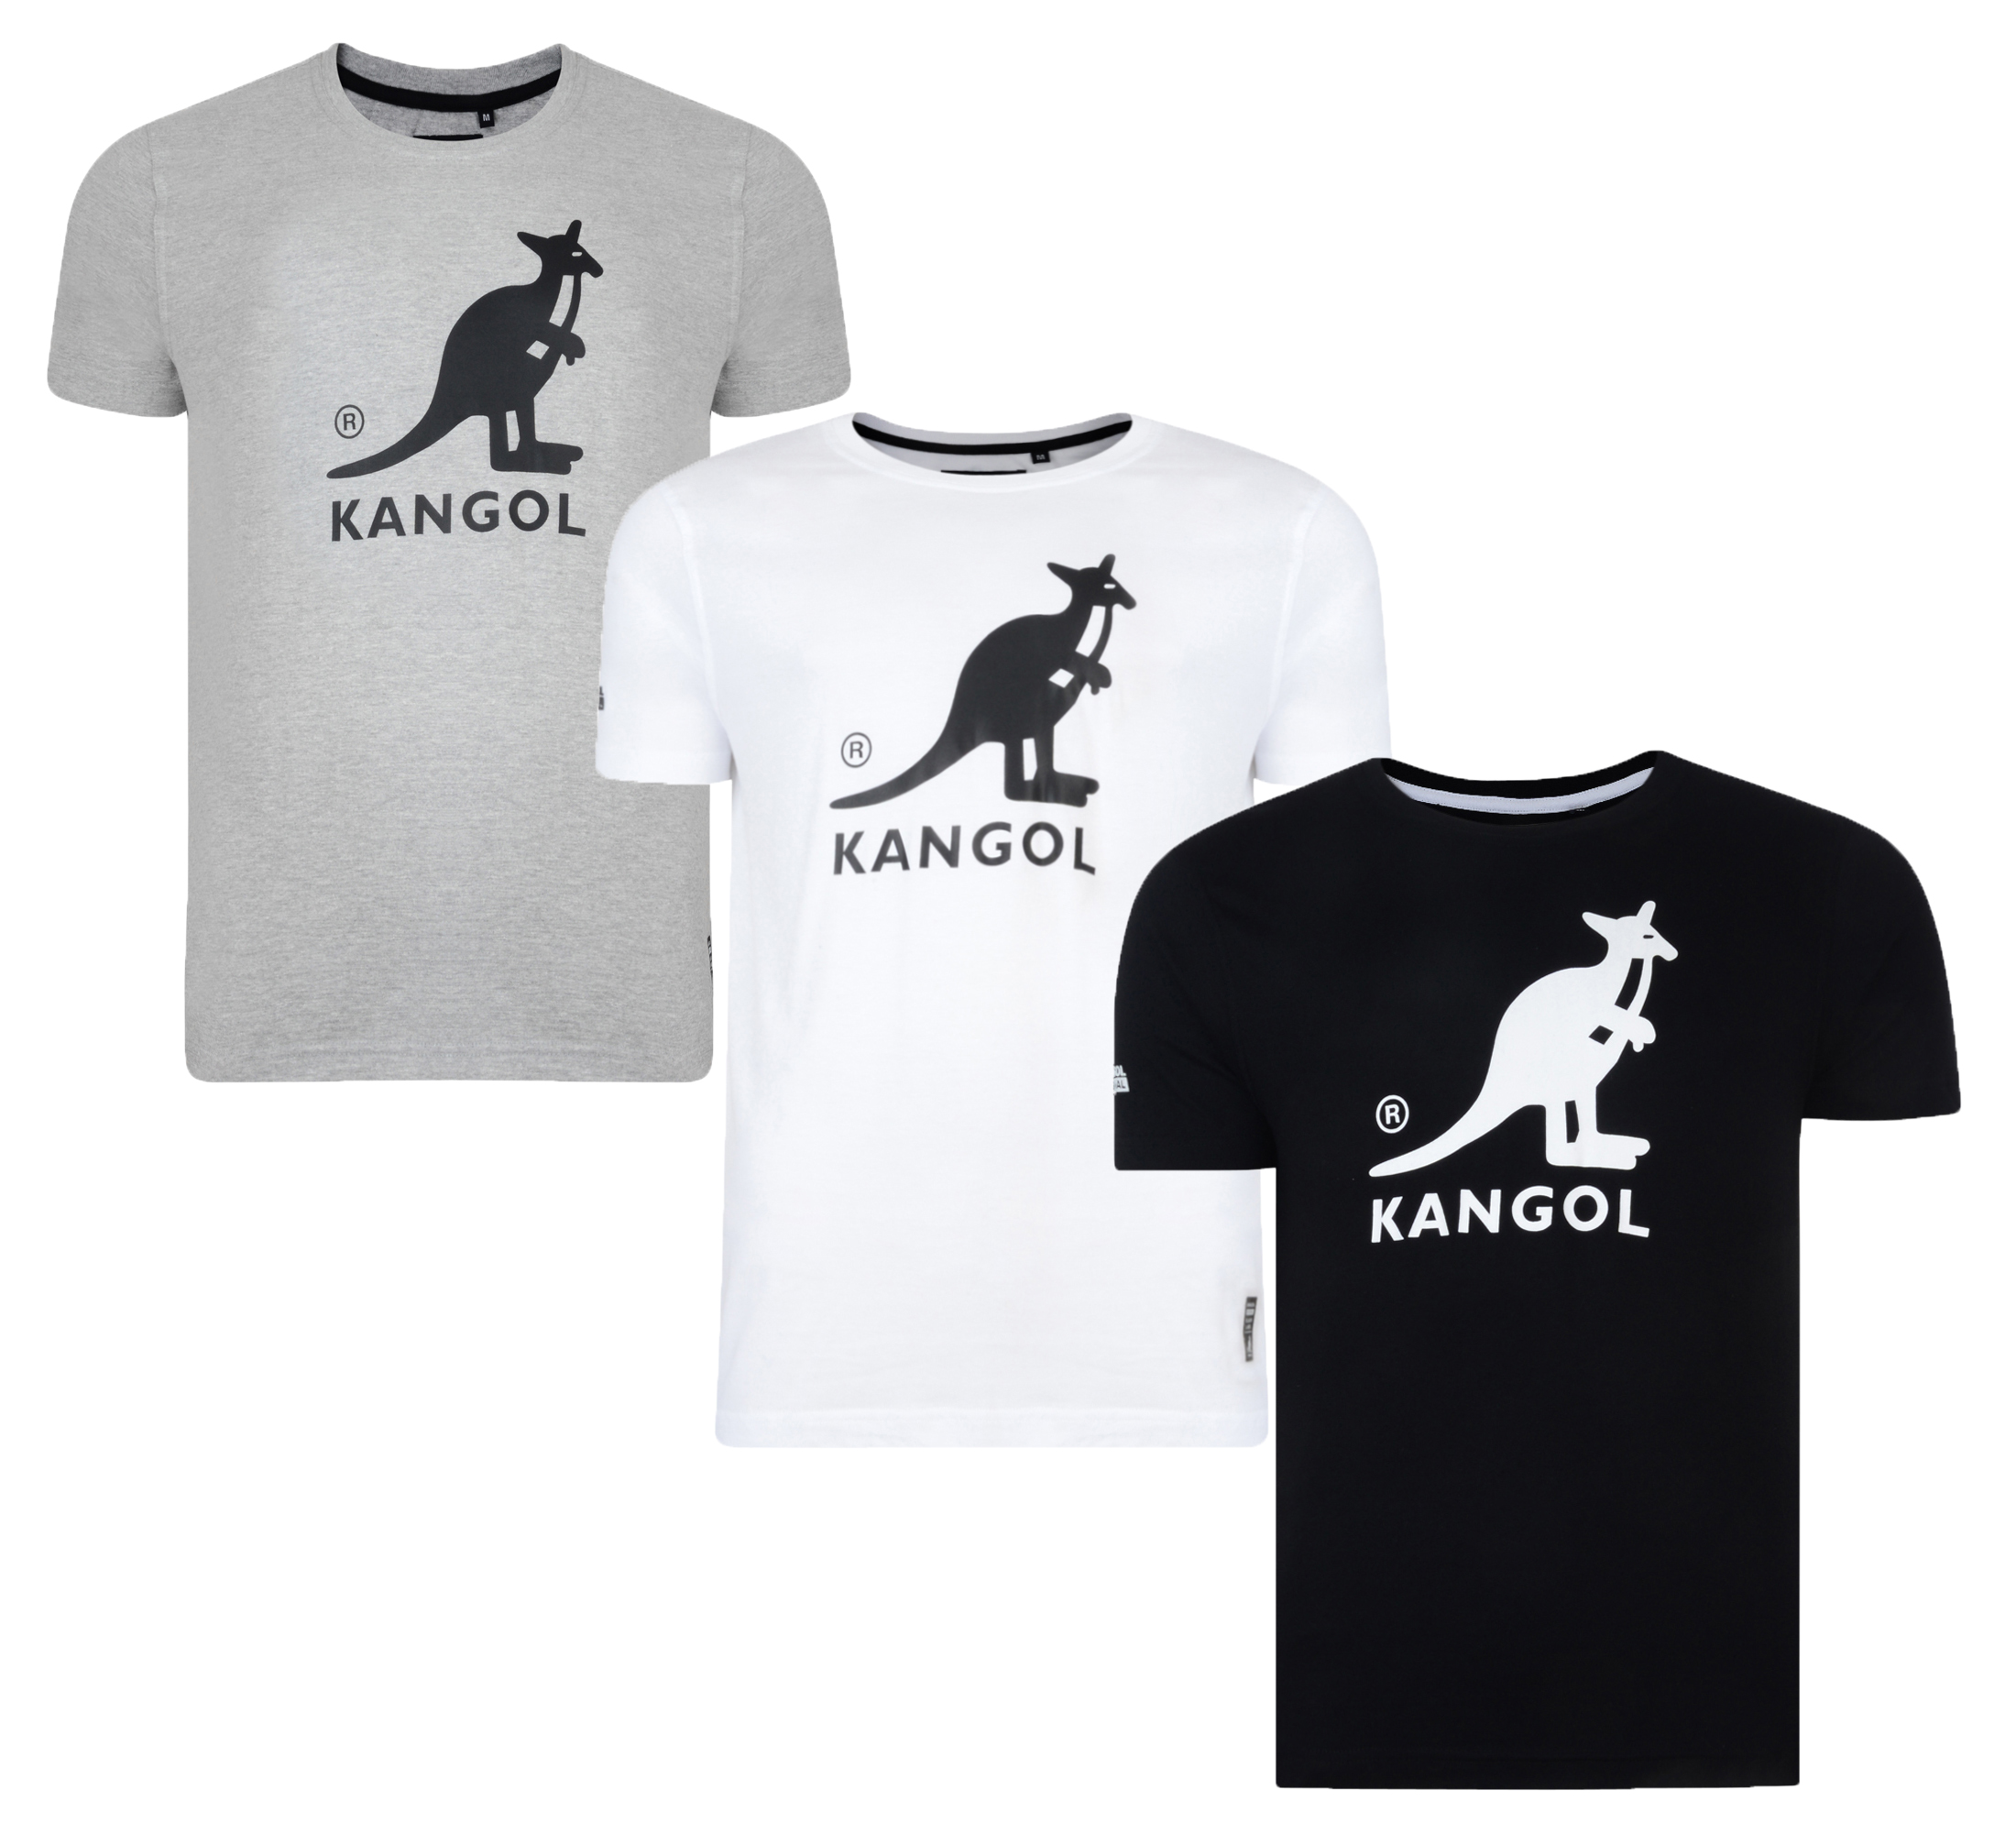 Kangol New Men's Printed Slim Fit Logo T-Shirt Branded Print Top S M L ...